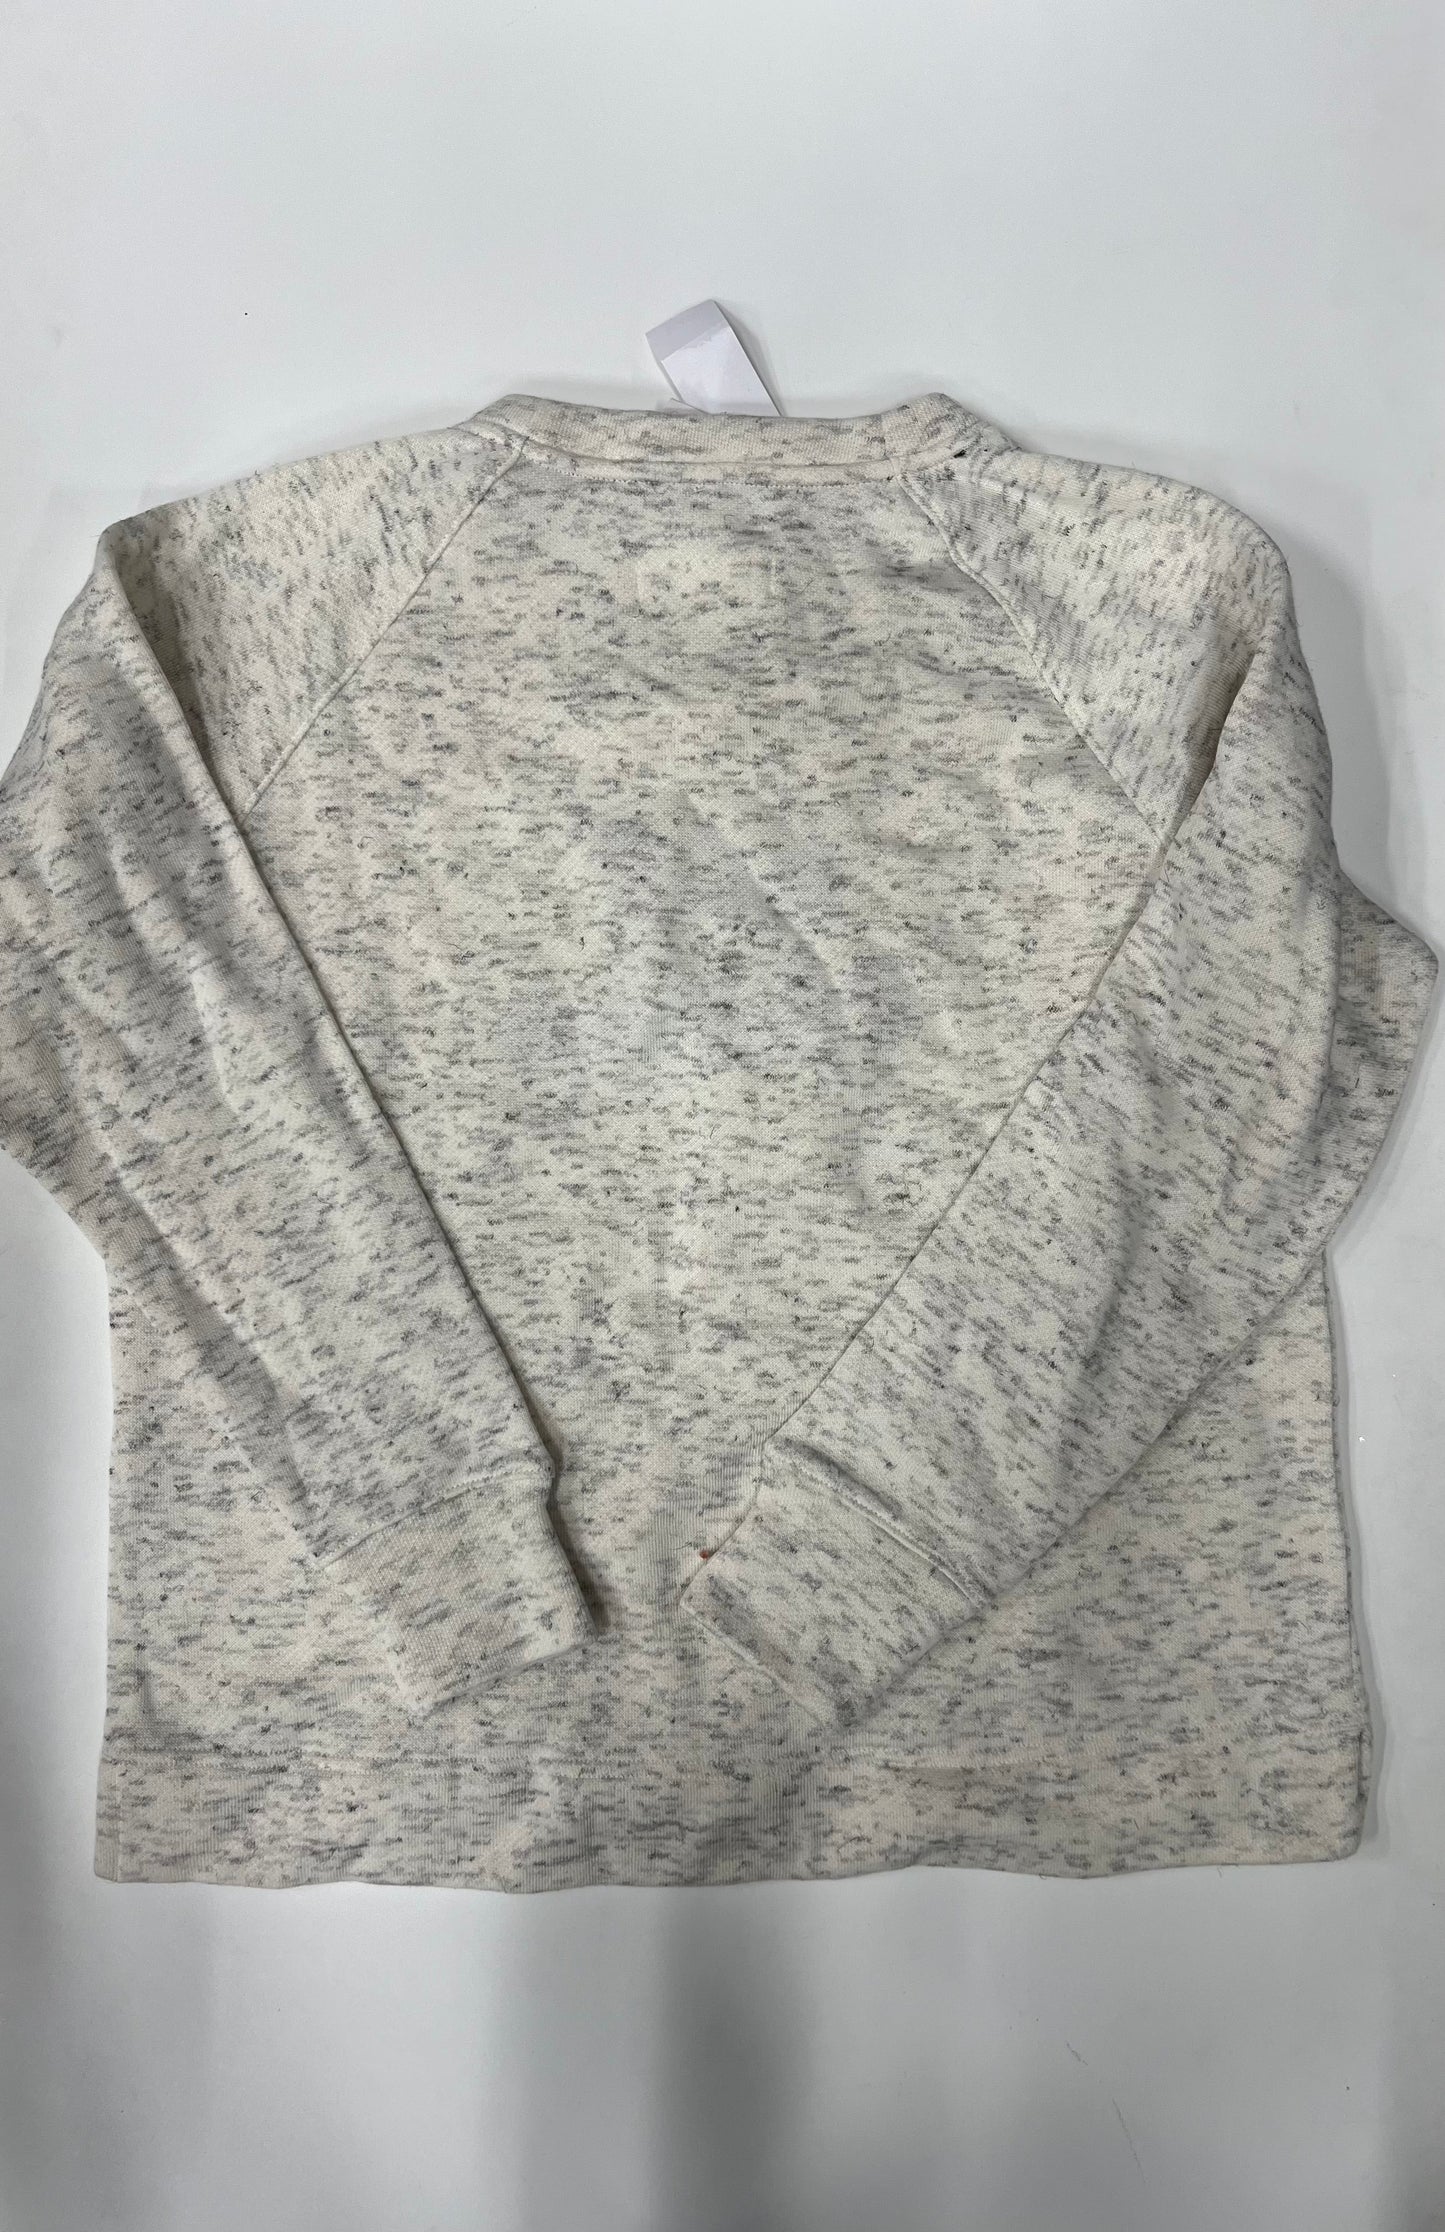 Sweatshirt Crewneck By Lou And Grey NWT Size: Xs